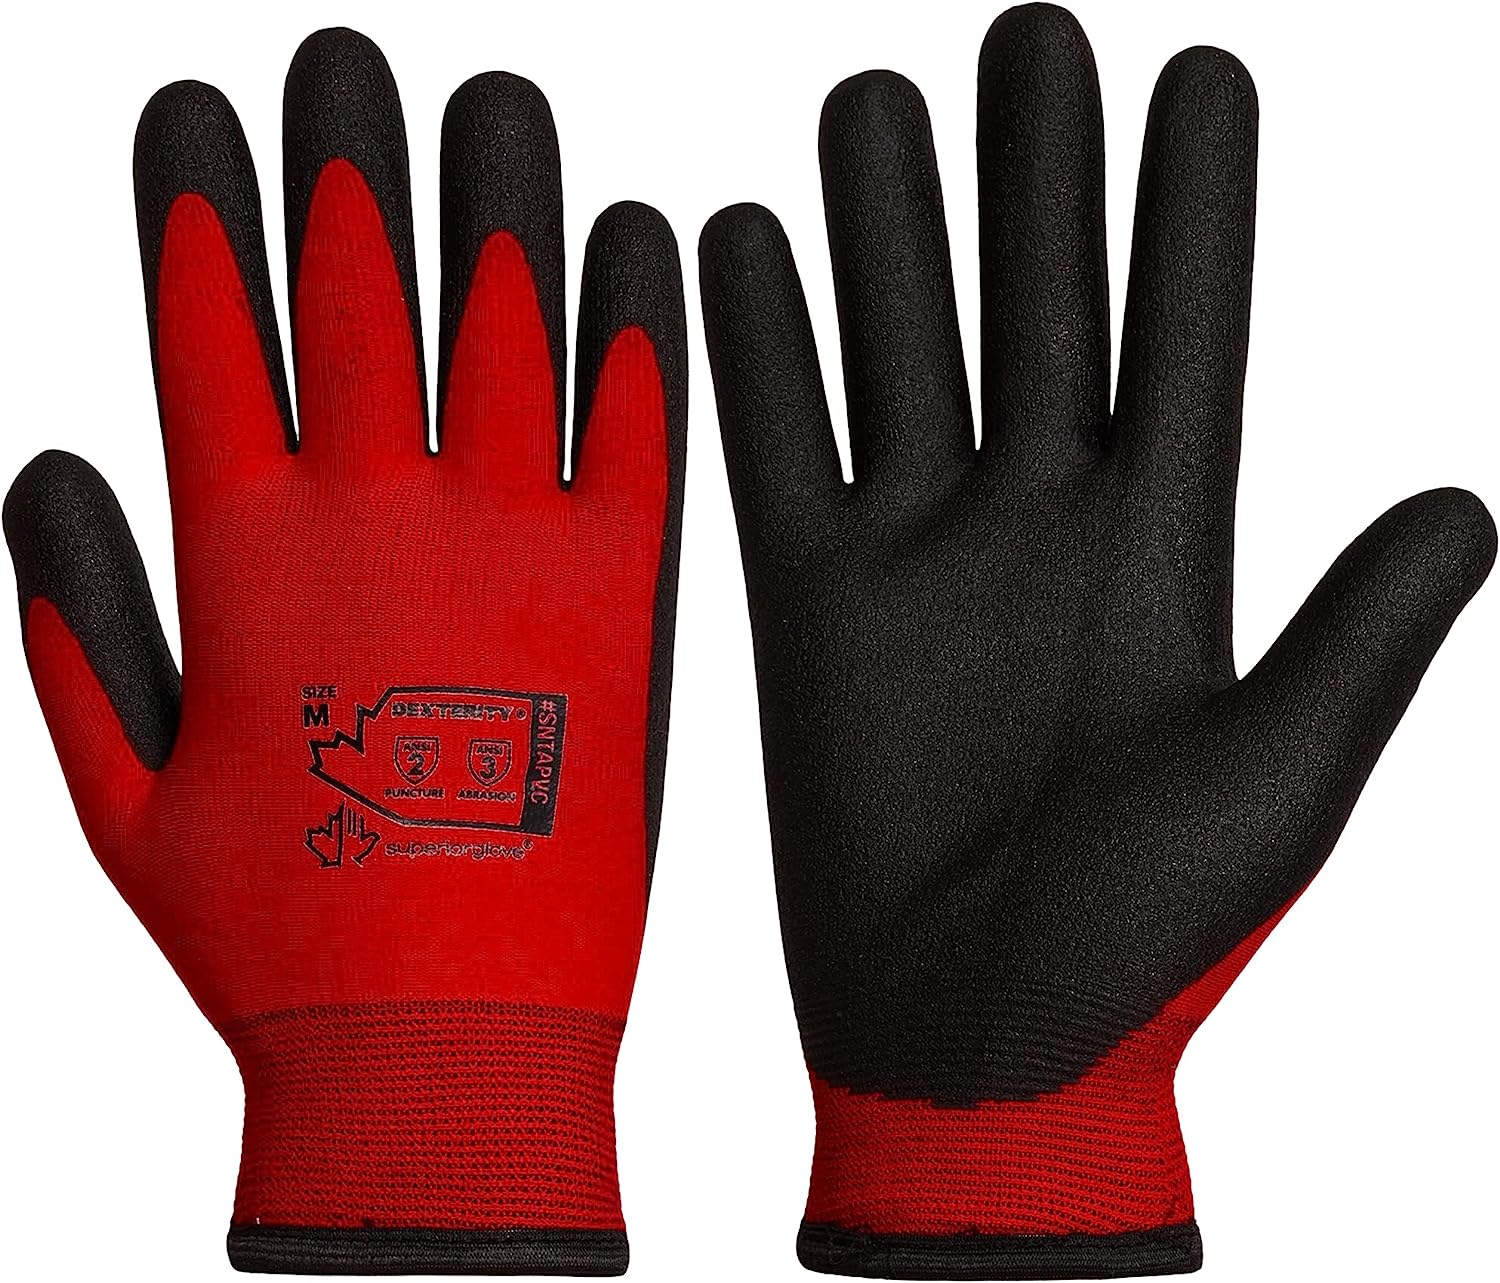 Superior Glove Winter Work Gloves - Fleece-Lined with [...]